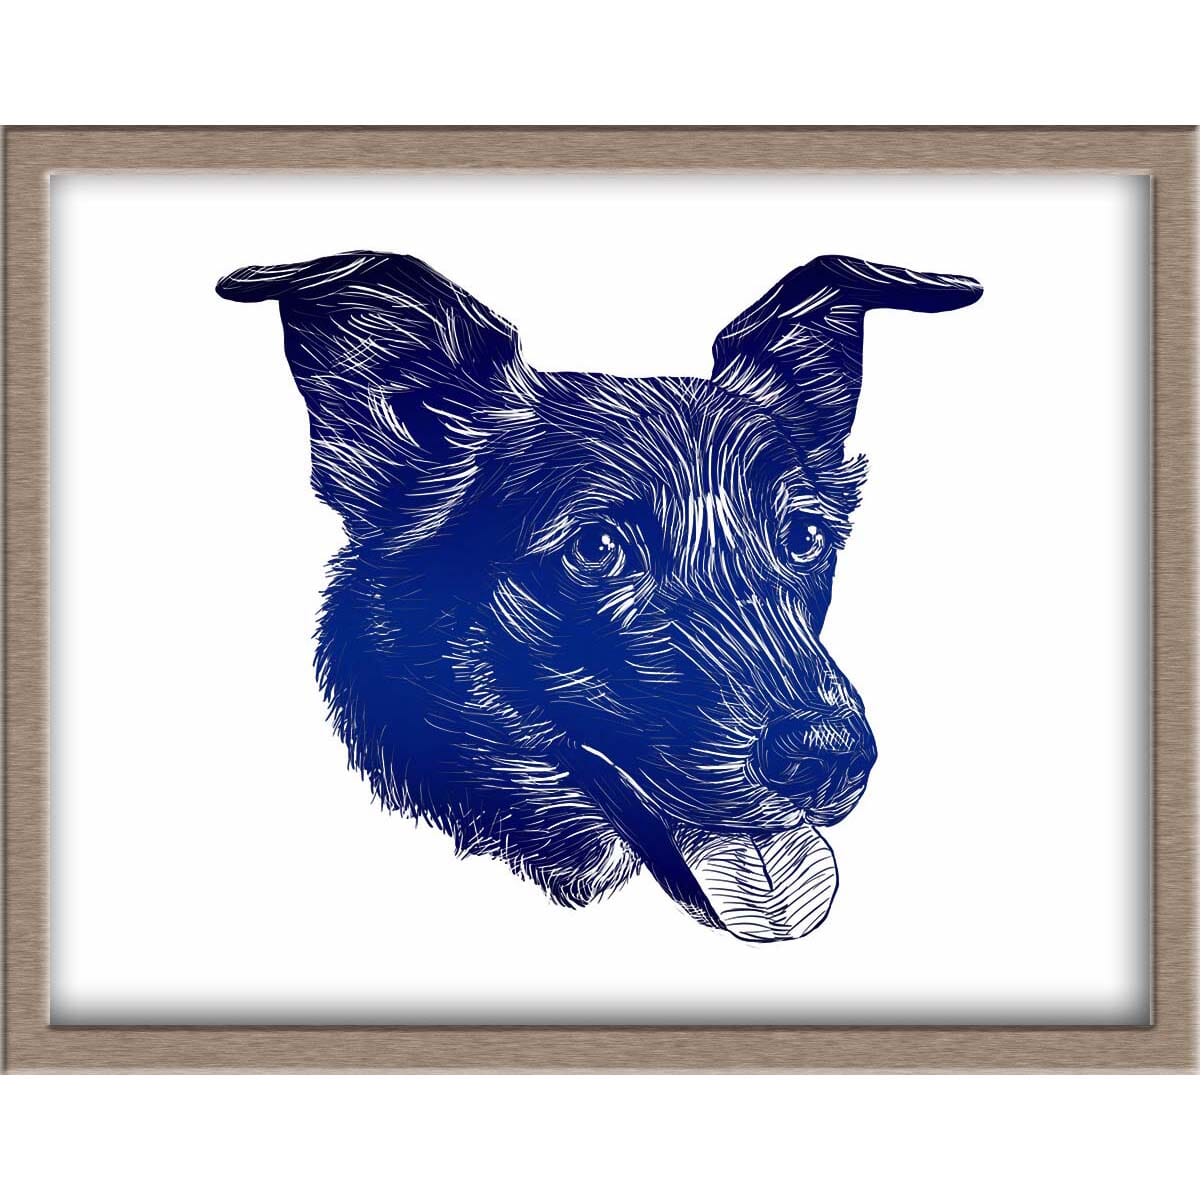 Cute Black Dog Foiled Print (Shadow) Posters, Prints, & Visual Artwork JoyousJoyfulJoyness 